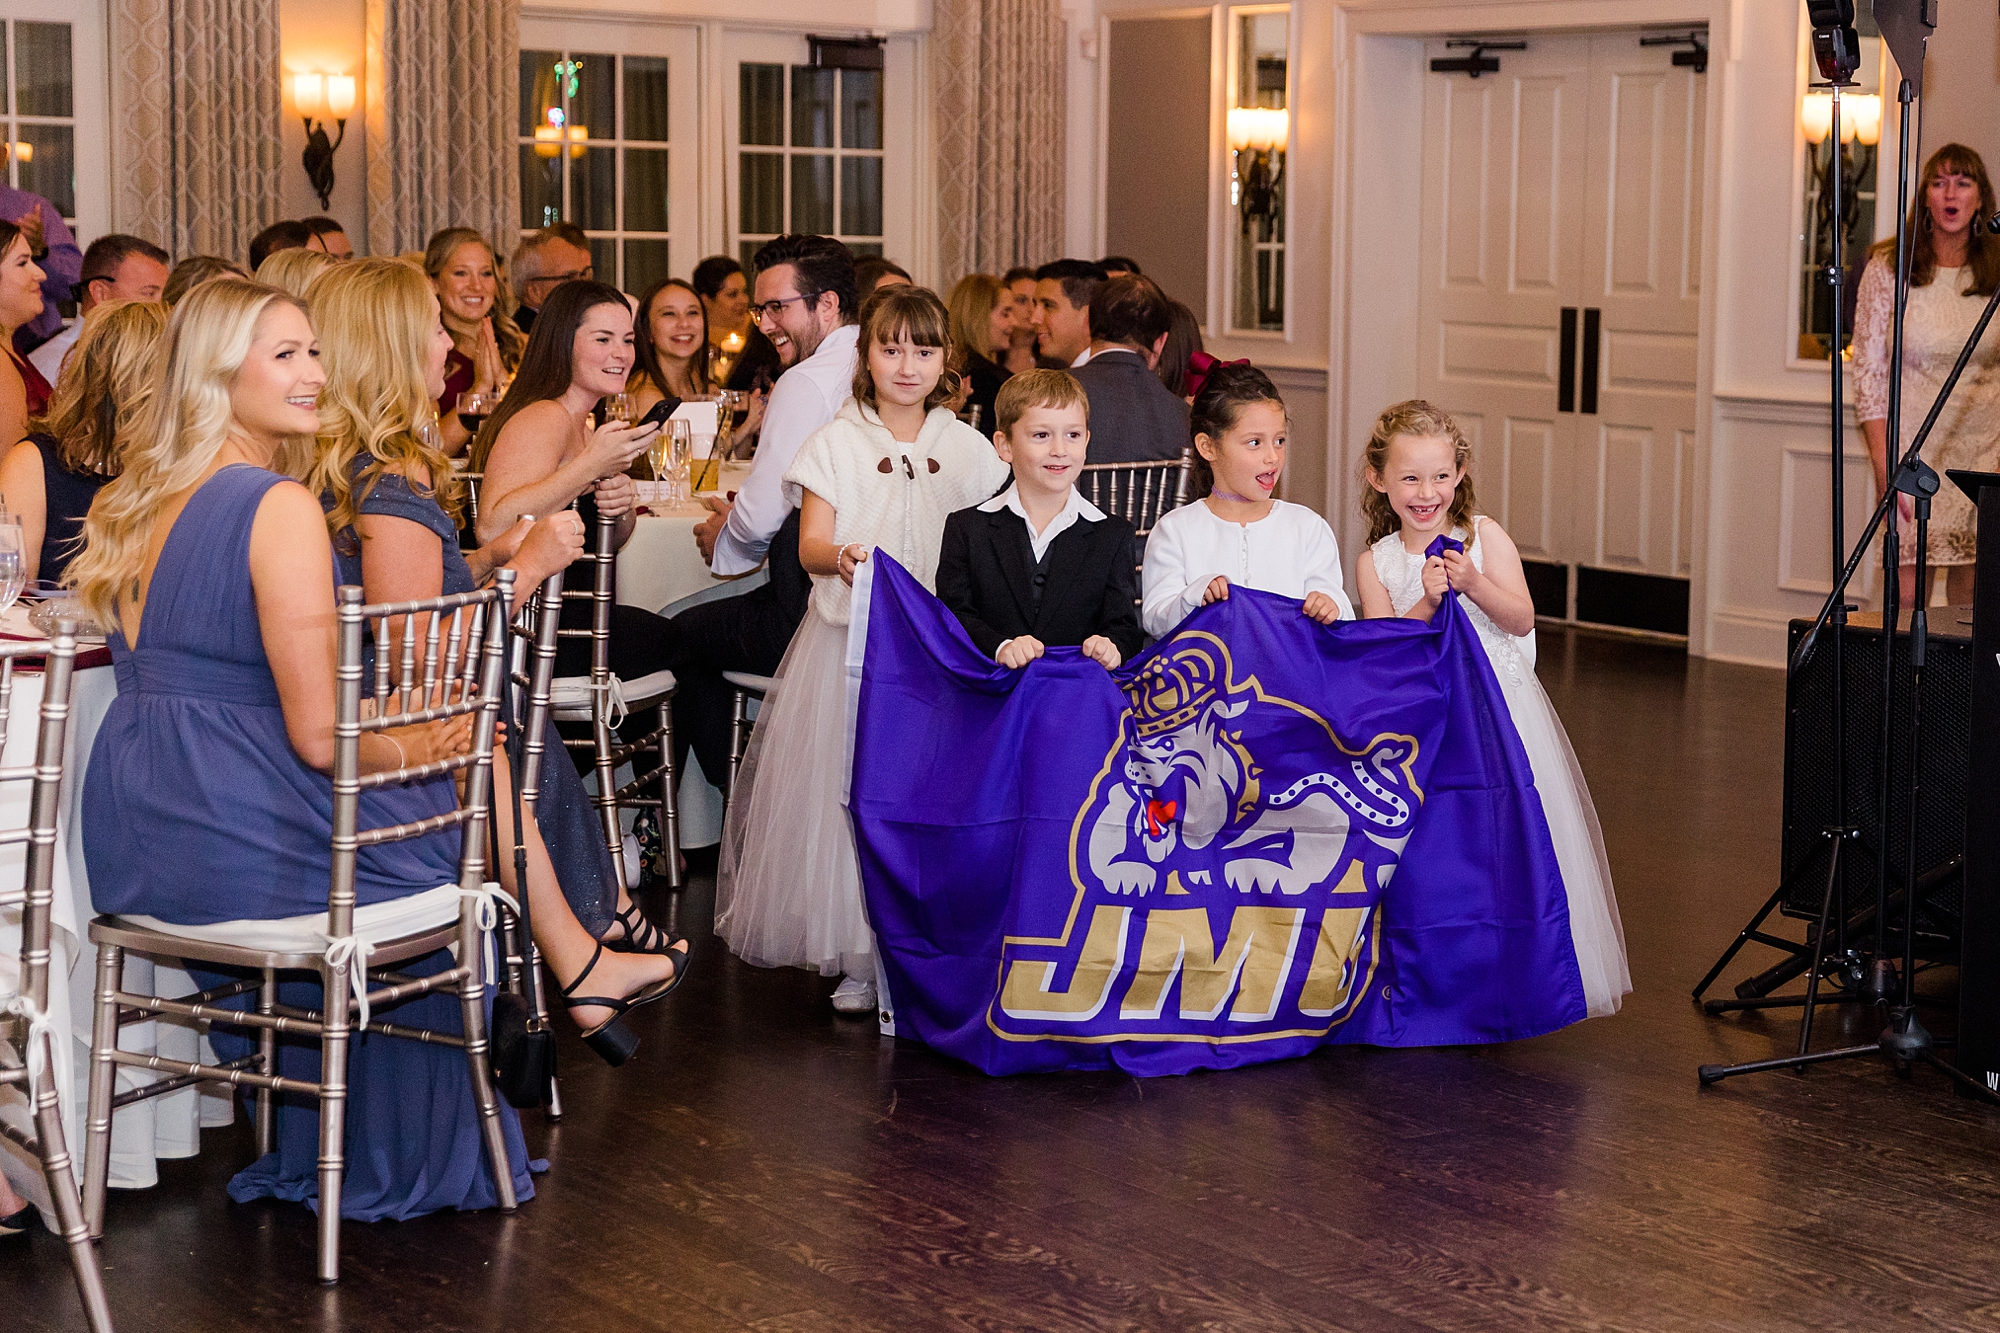 flower girls and ring bearers enter wedding reception holding JMU banner